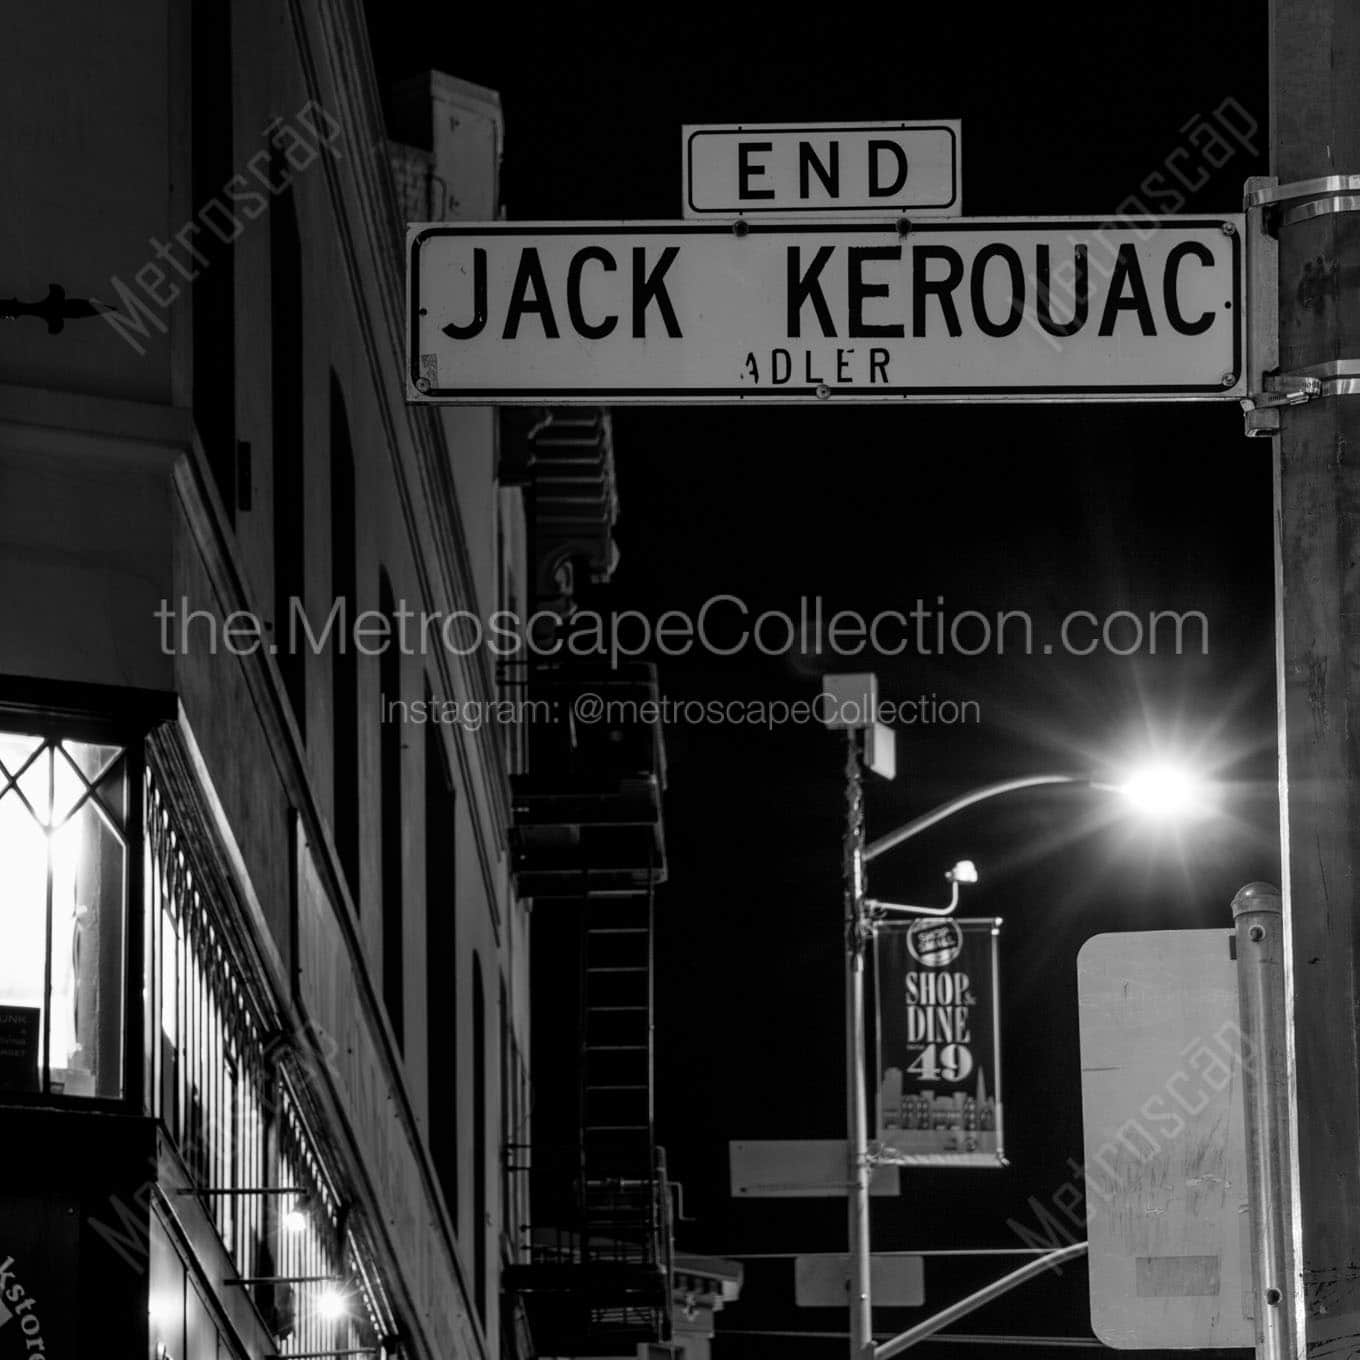 jack kerouac boulevard street sign Black & White Office Art